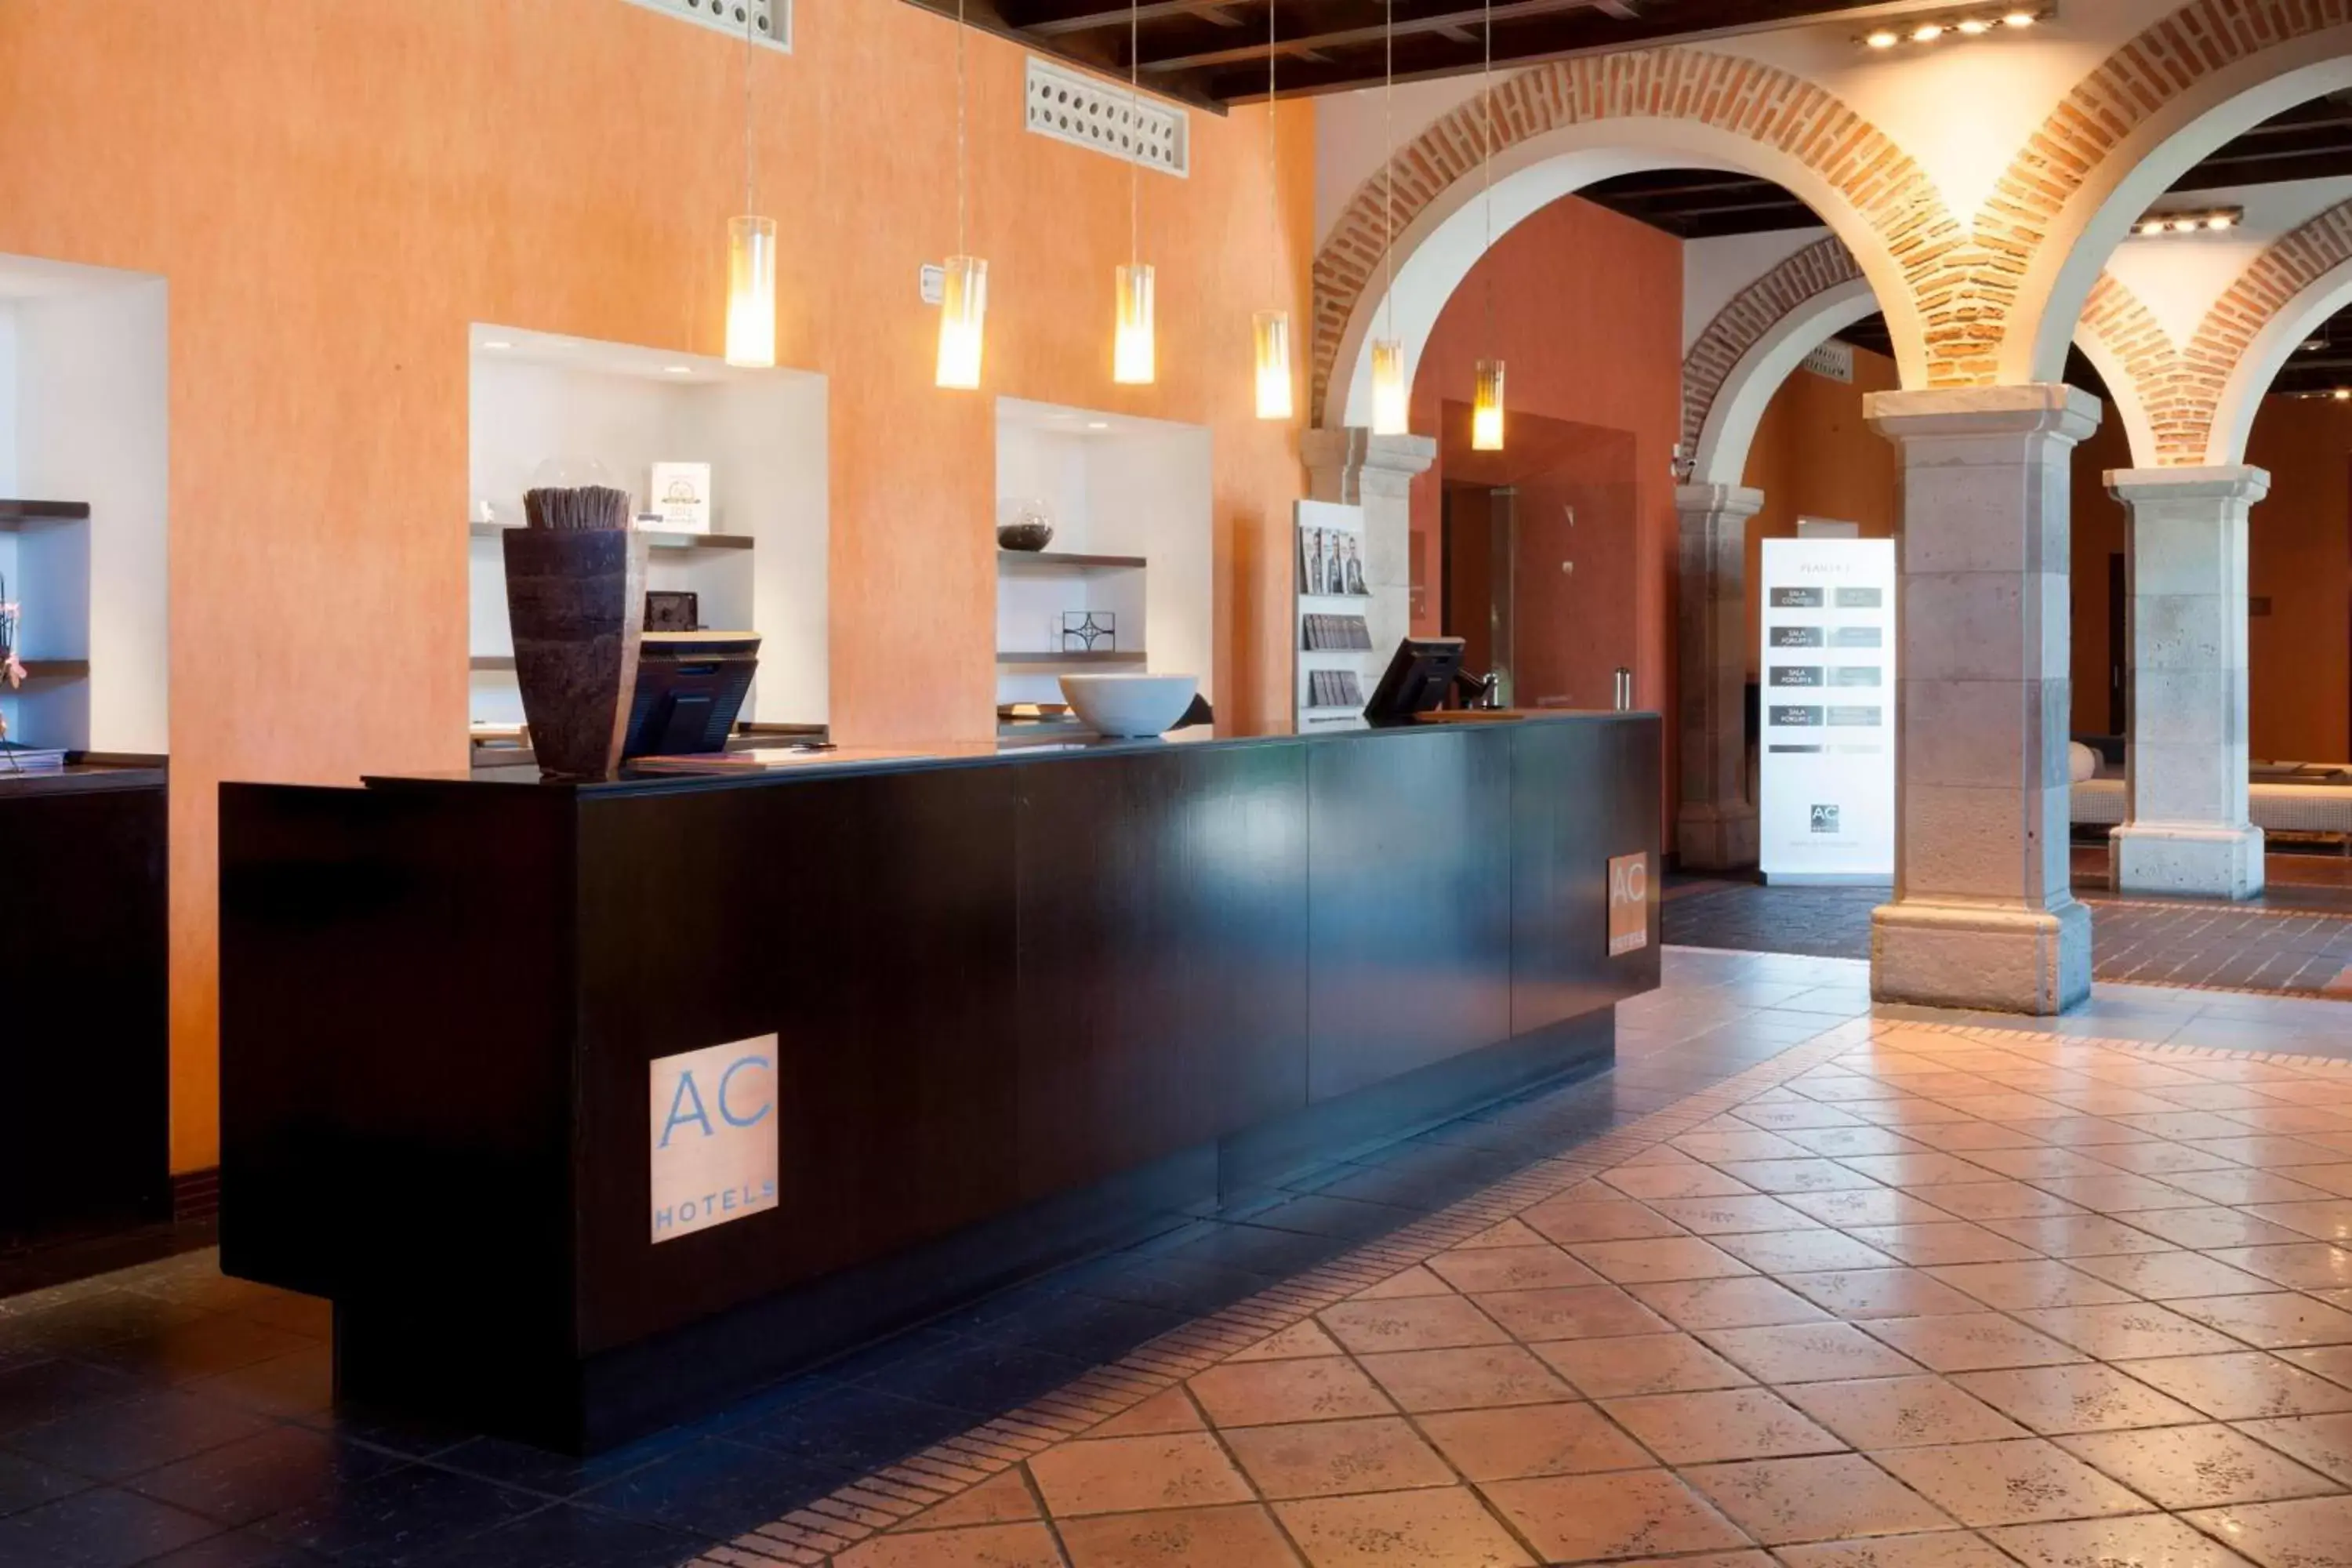 Lobby or reception, Lobby/Reception in AC Hotel Palacio de Santa Ana by Marriott